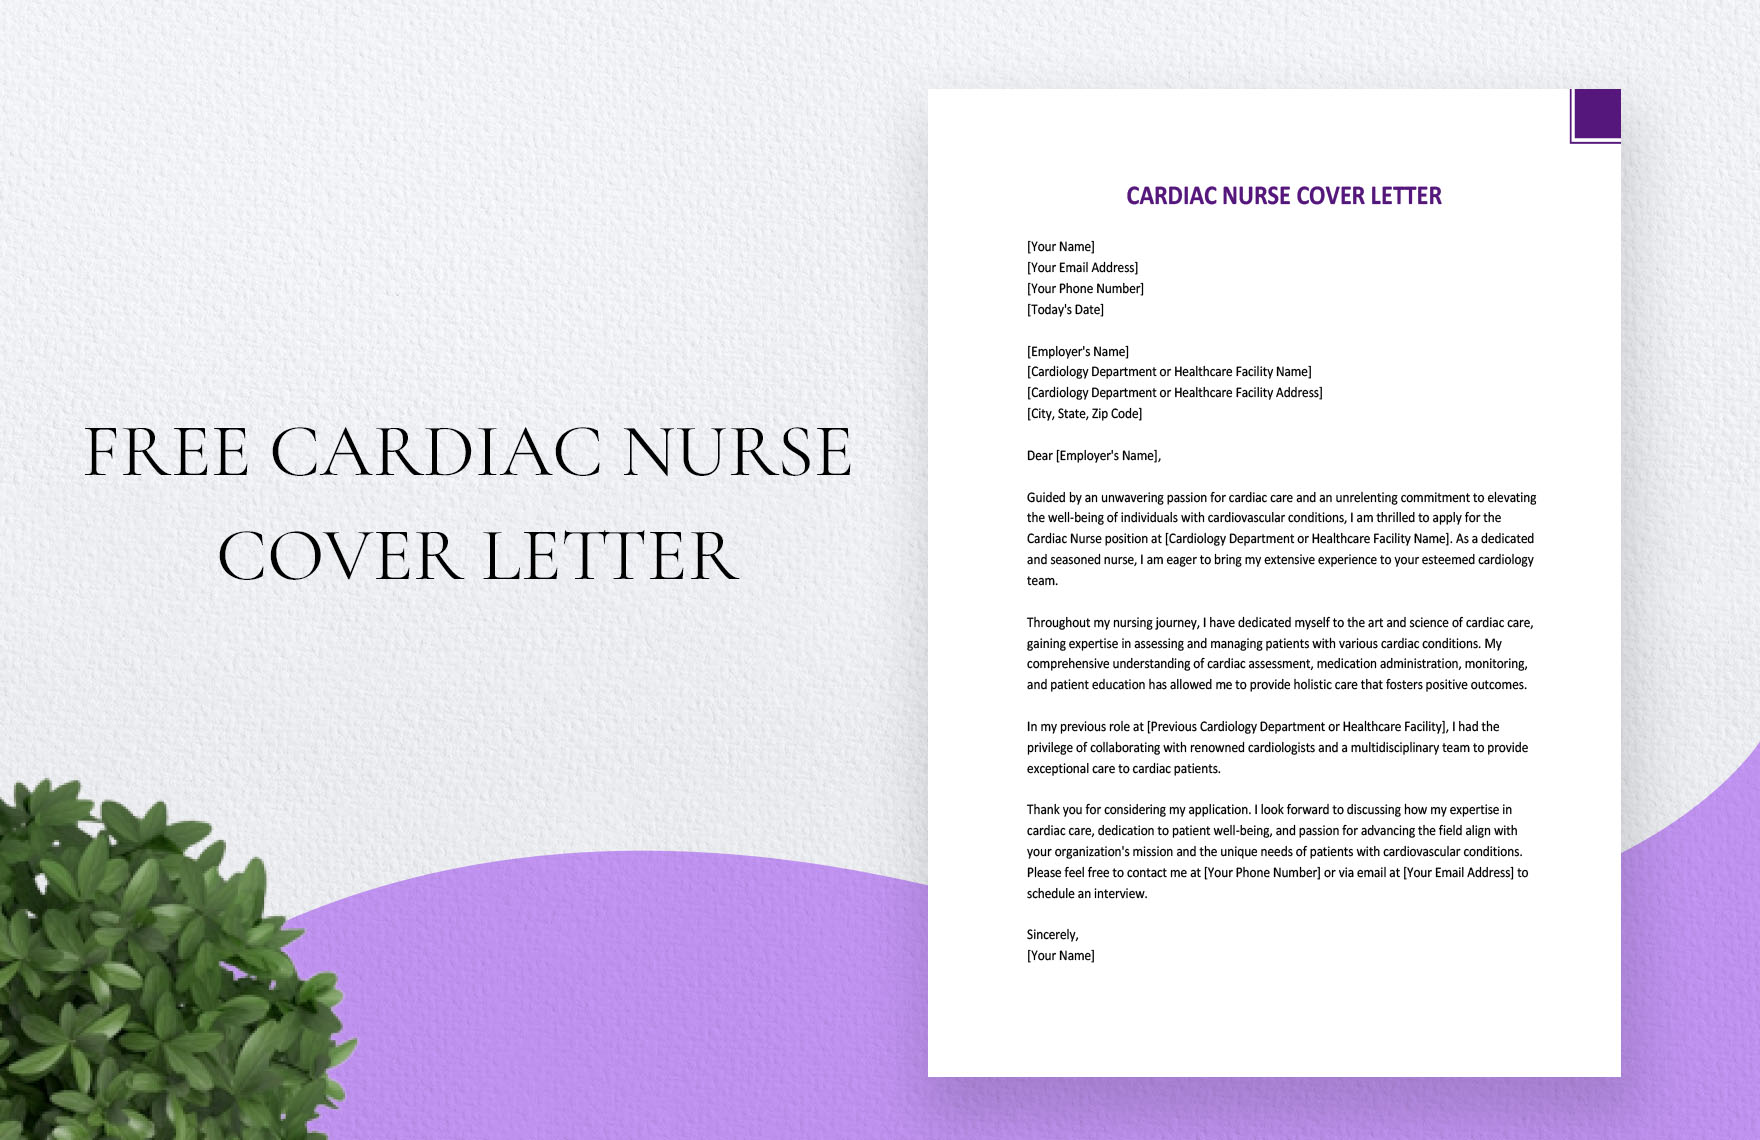 Cardiac Nurse Cover Letter in Word, Google Docs